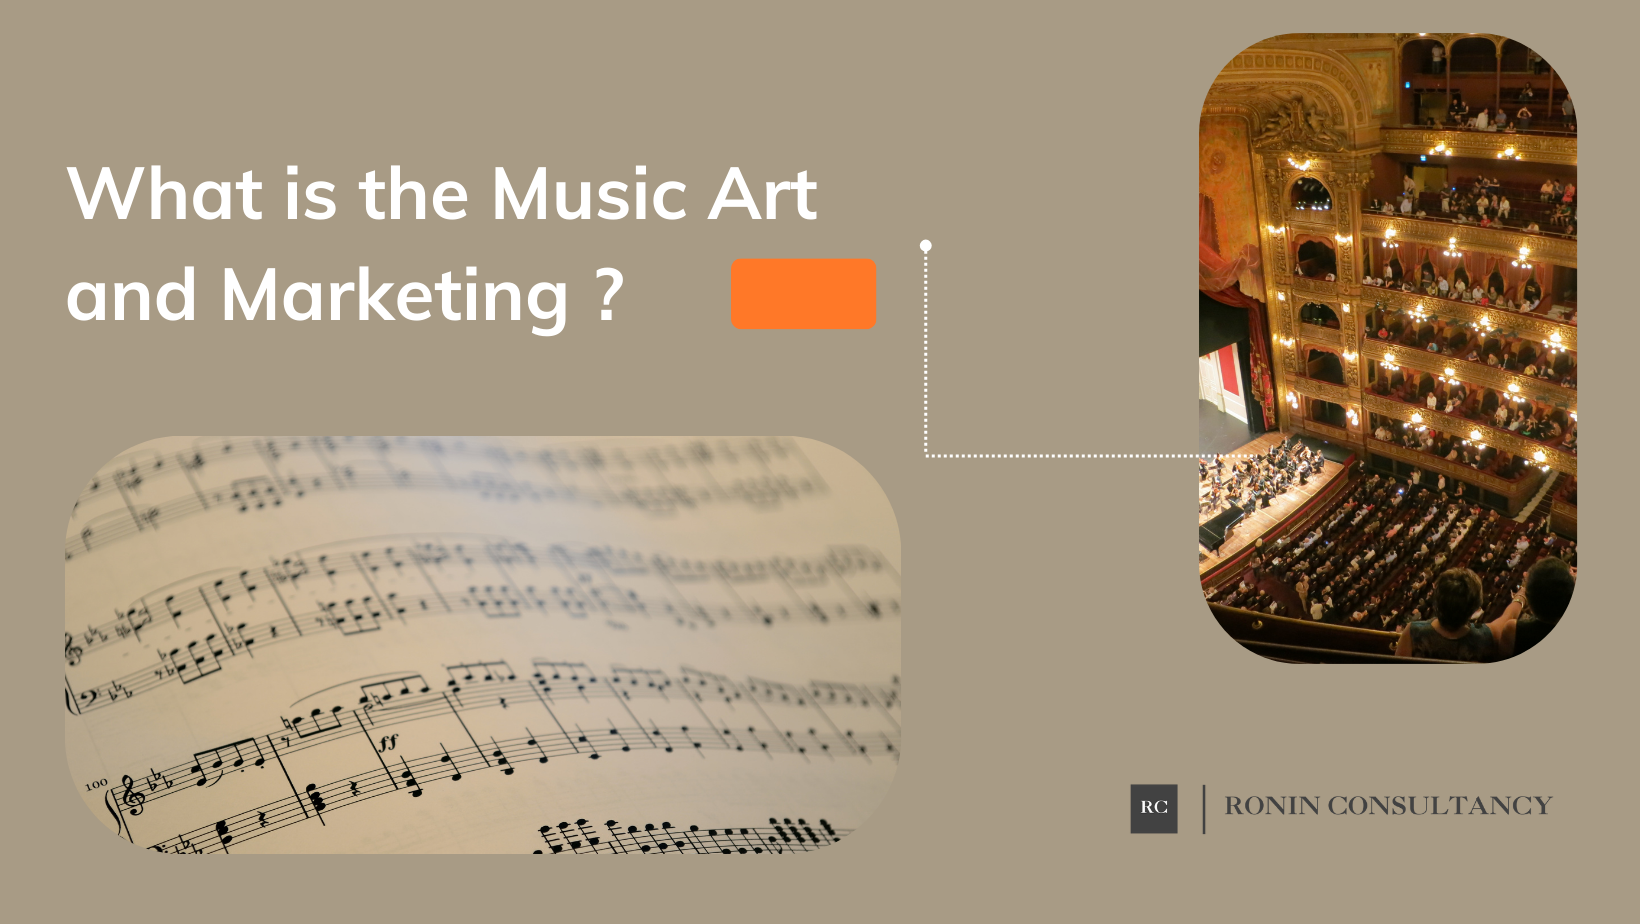 Music Art and Marketing